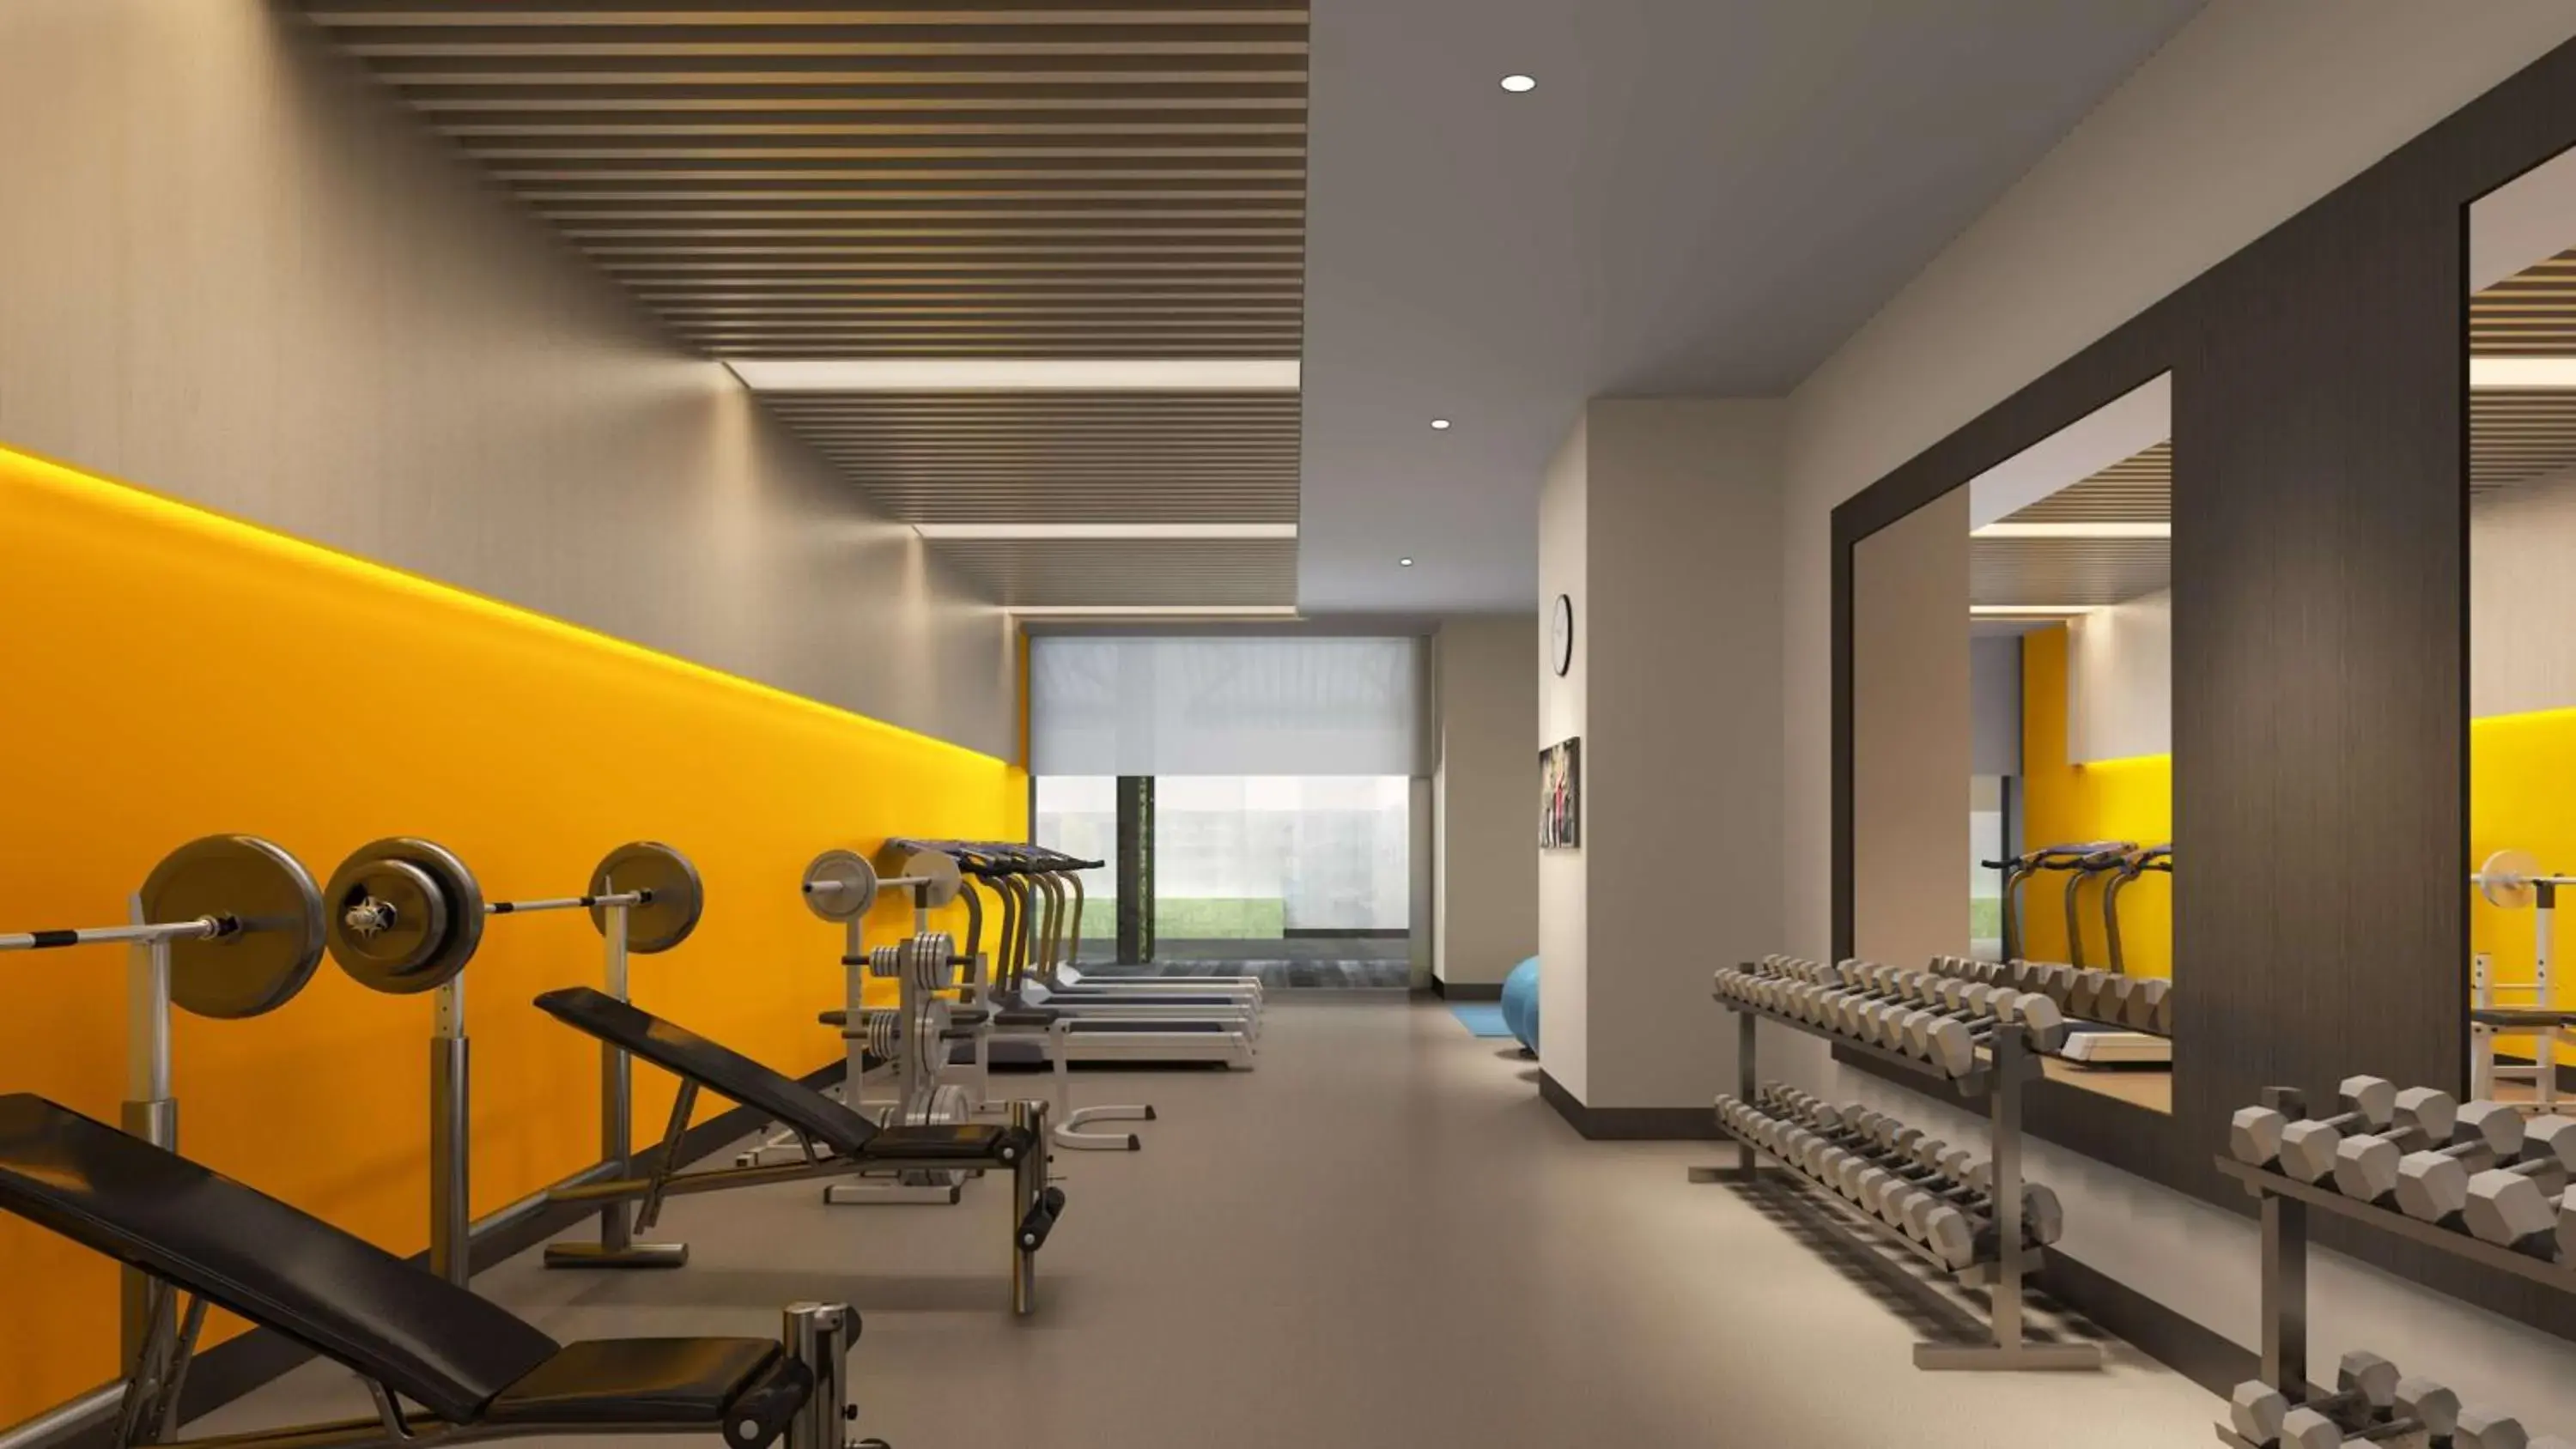 Fitness centre/facilities, Fitness Center/Facilities in Hilton Garden Inn Guangzhou Tianhe